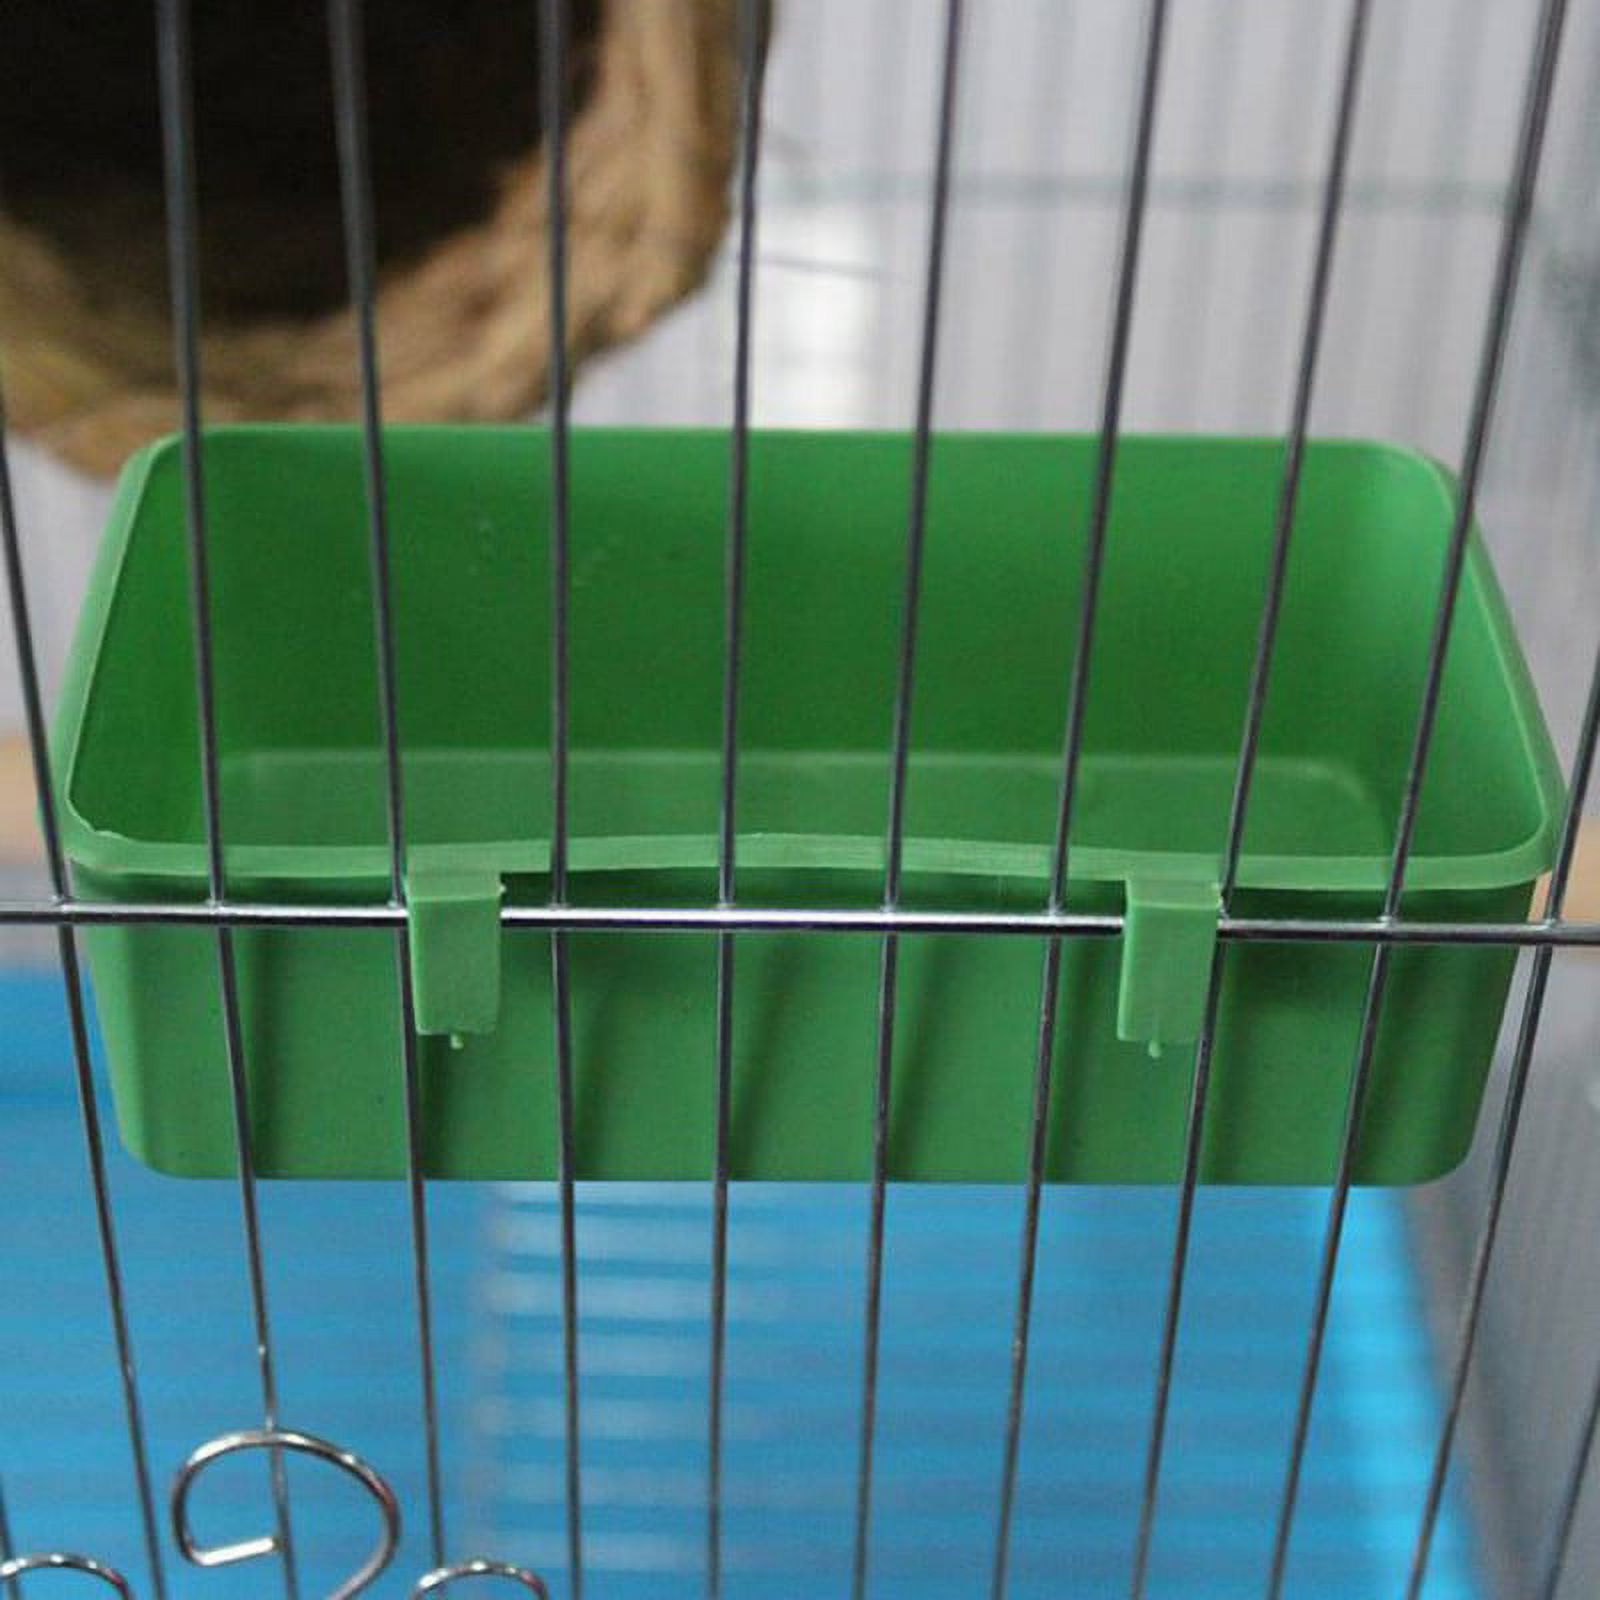 Feiona Parrot Bathtub With Mirror Pet Cage Bird Mirror Bath Shower Box Bird Cage Pet Small Bird Parrot Cage Bird Toys Accessories - image 3 of 6